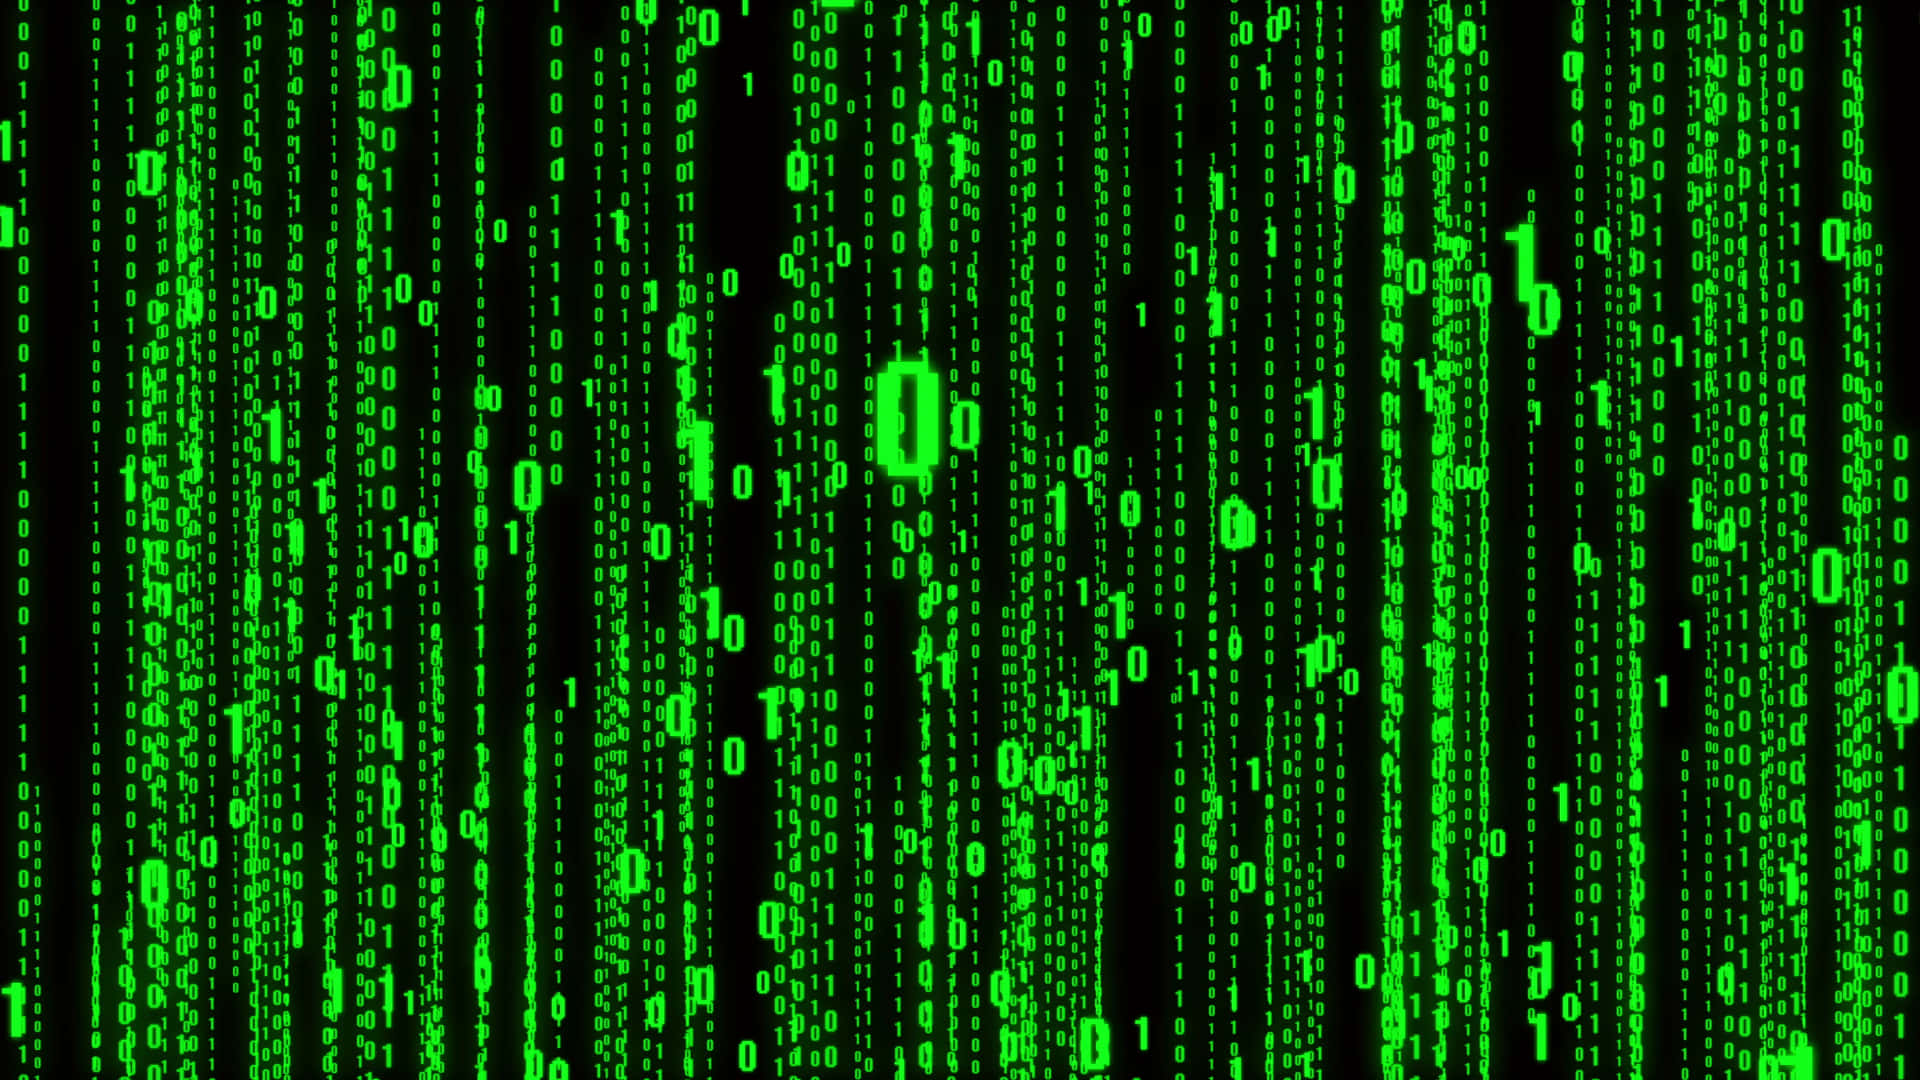 Master the mysteries of Matrix Code Wallpaper